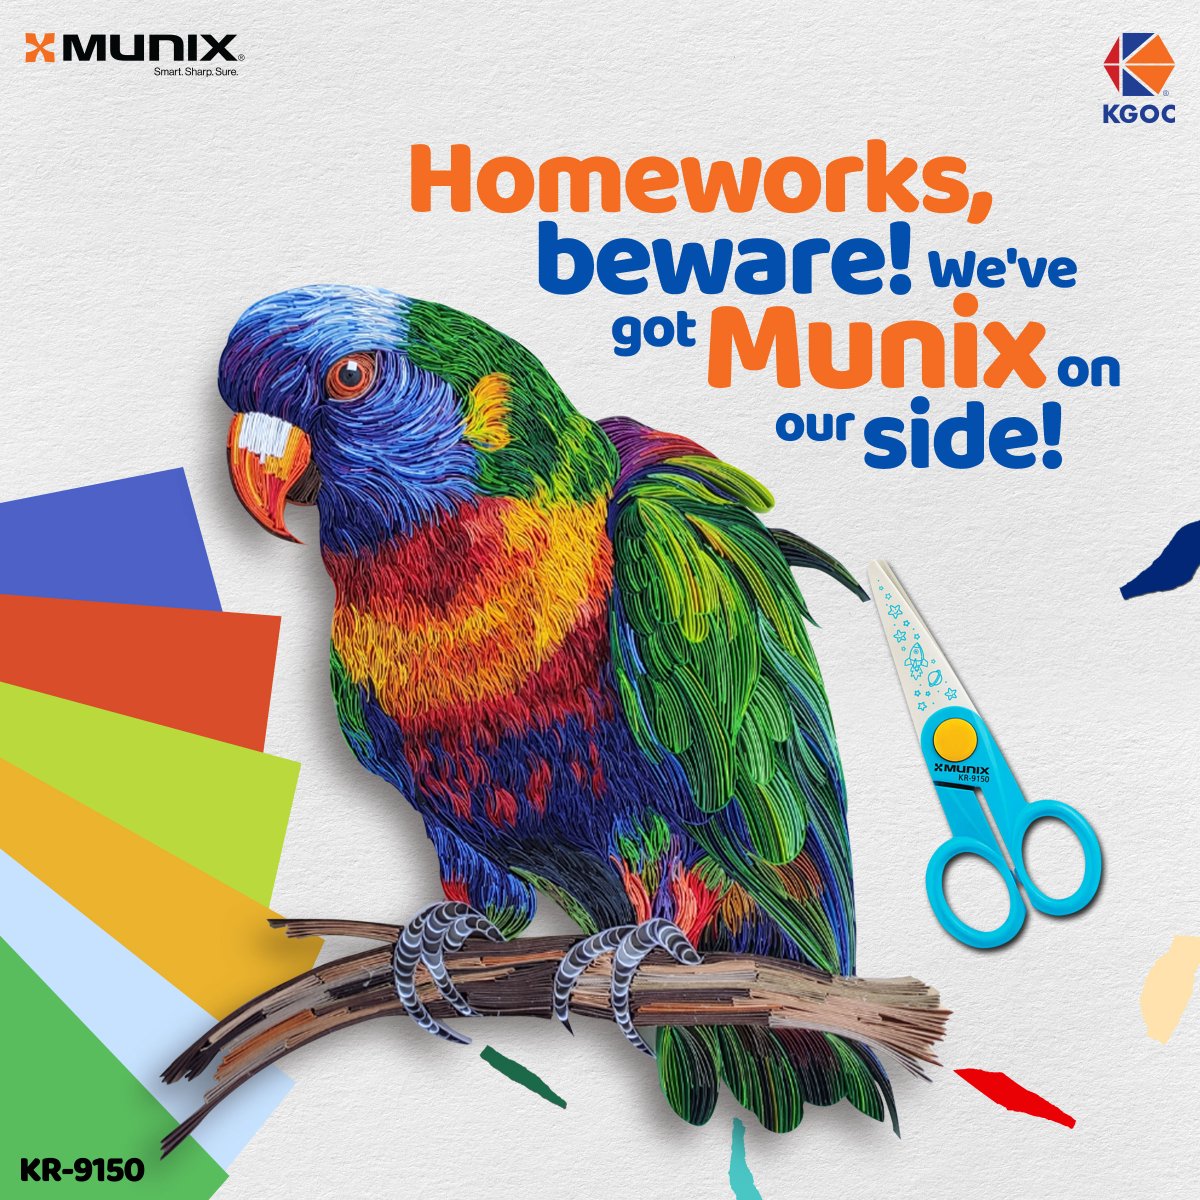 Watch out, homework! Munix is here to save the homework season! 💪✨ #munix #kgoc